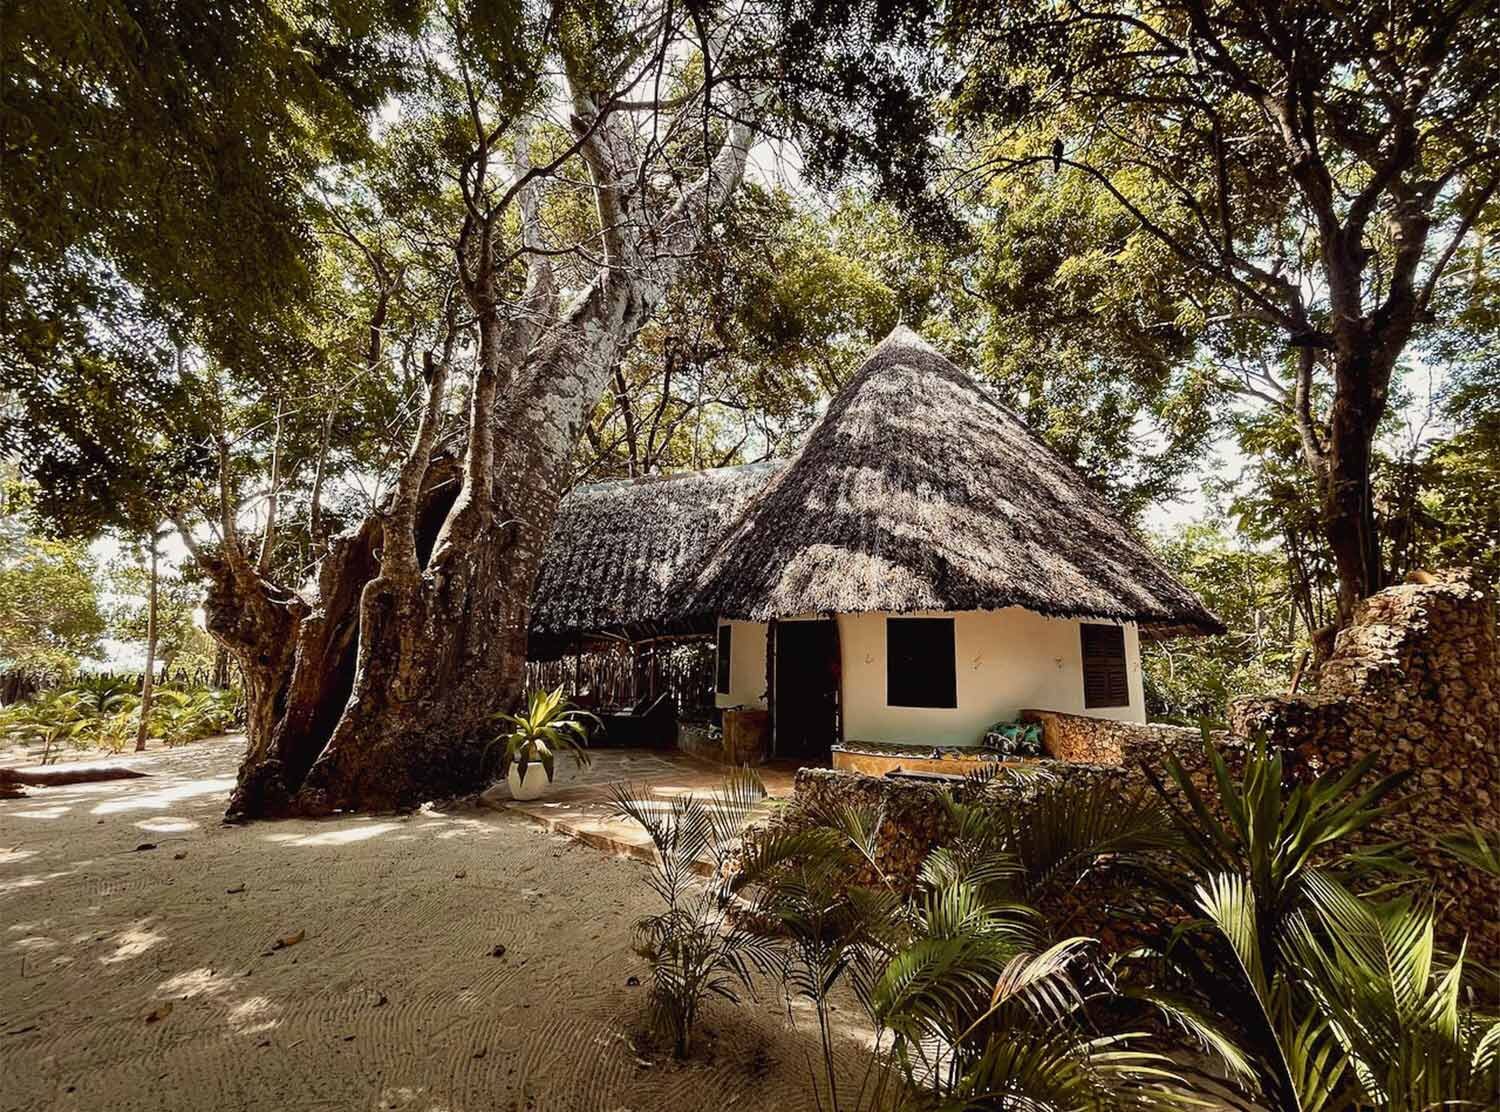 Kinondo Kwetu Whimsical cottages and ancient baobabs